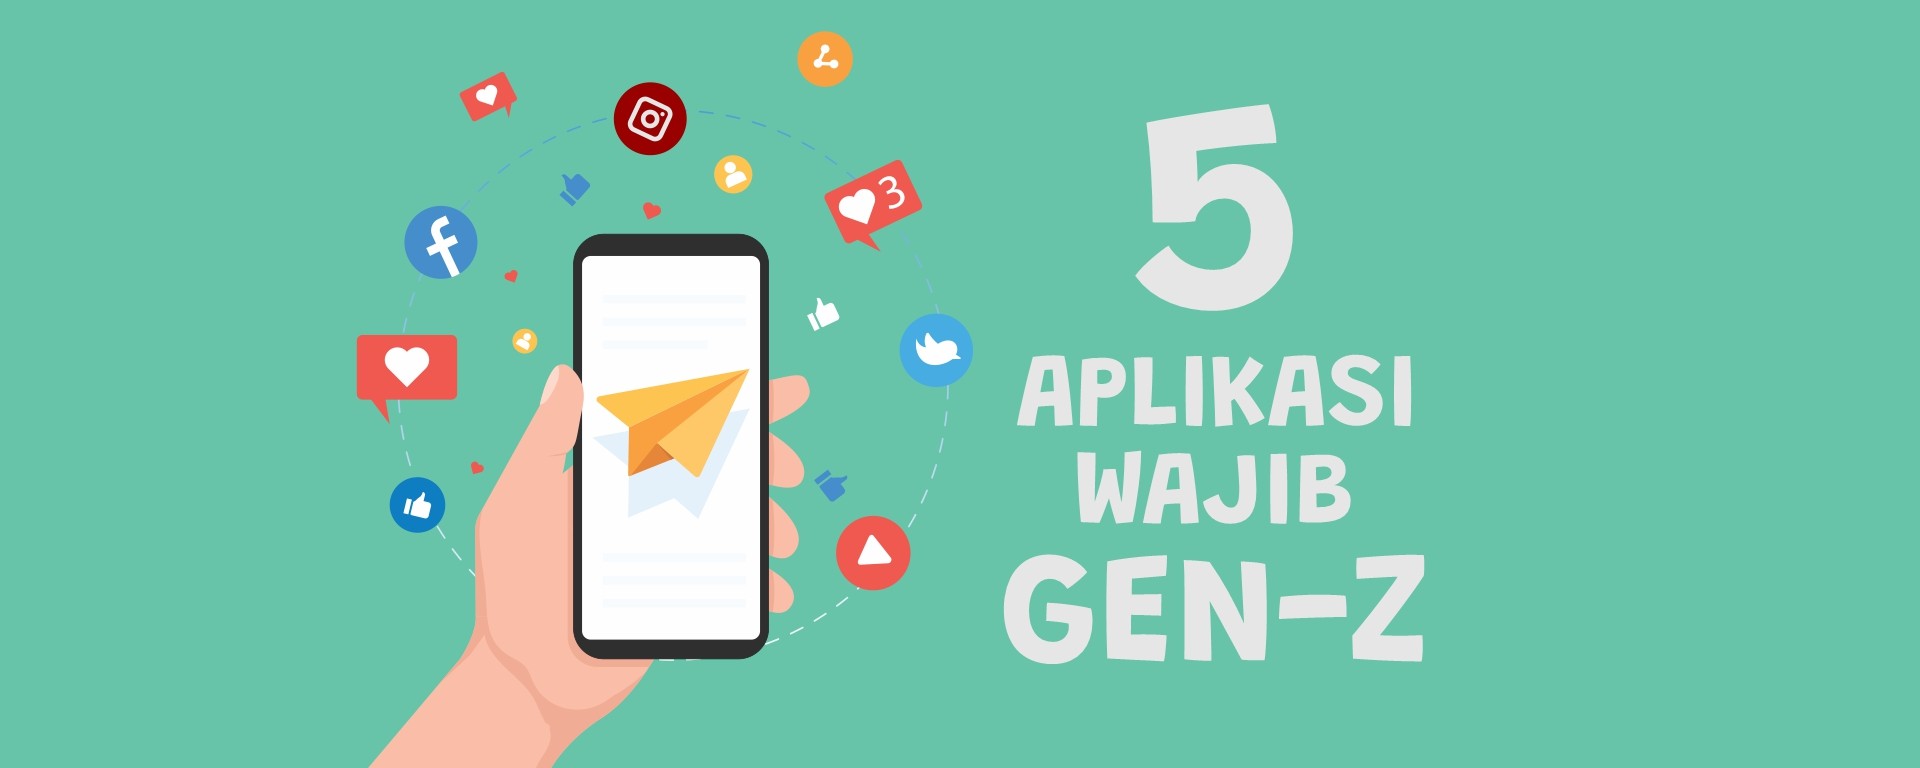 5 Aplikasi Wajib di Smartphone bagi Pelajar Gen Z